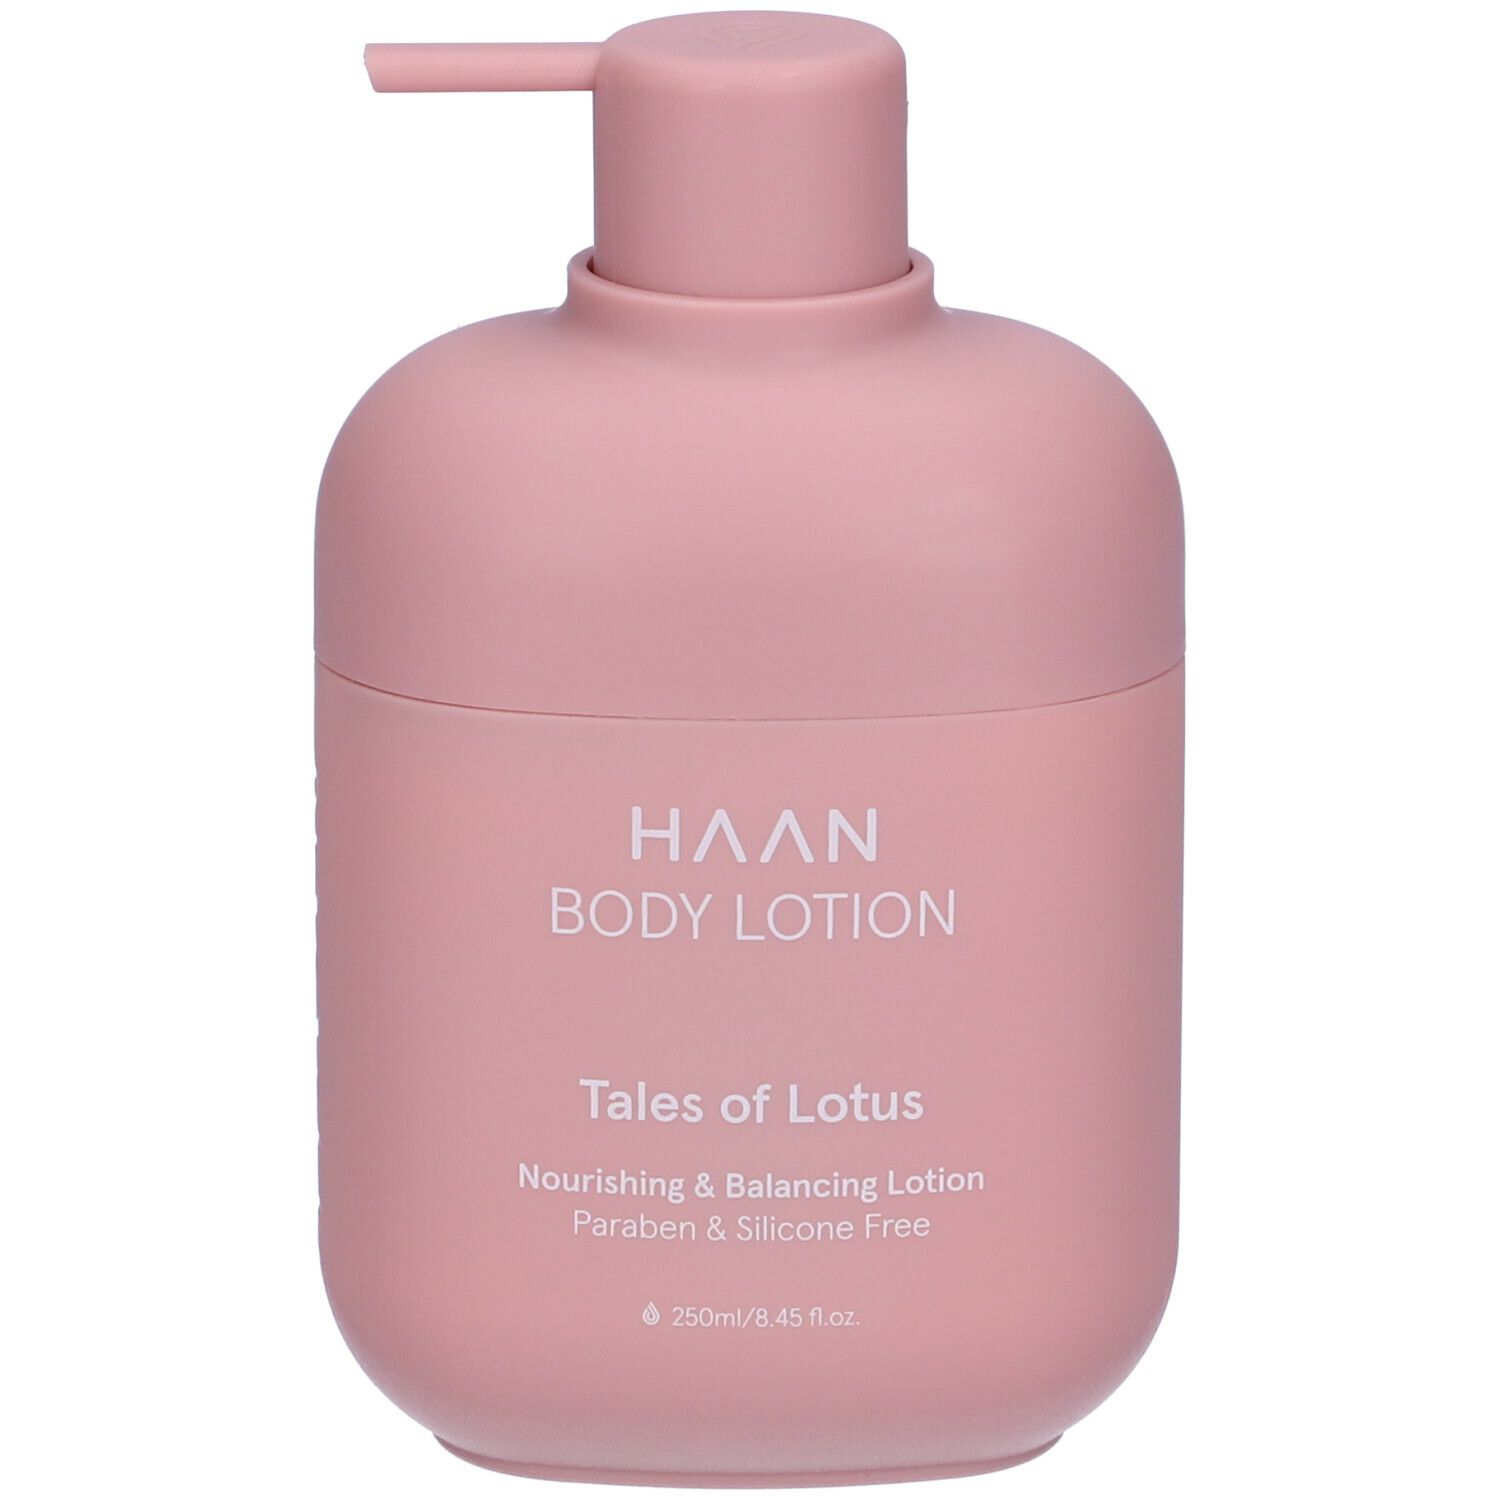 HAAN, Tales of Lotus Body Lotion